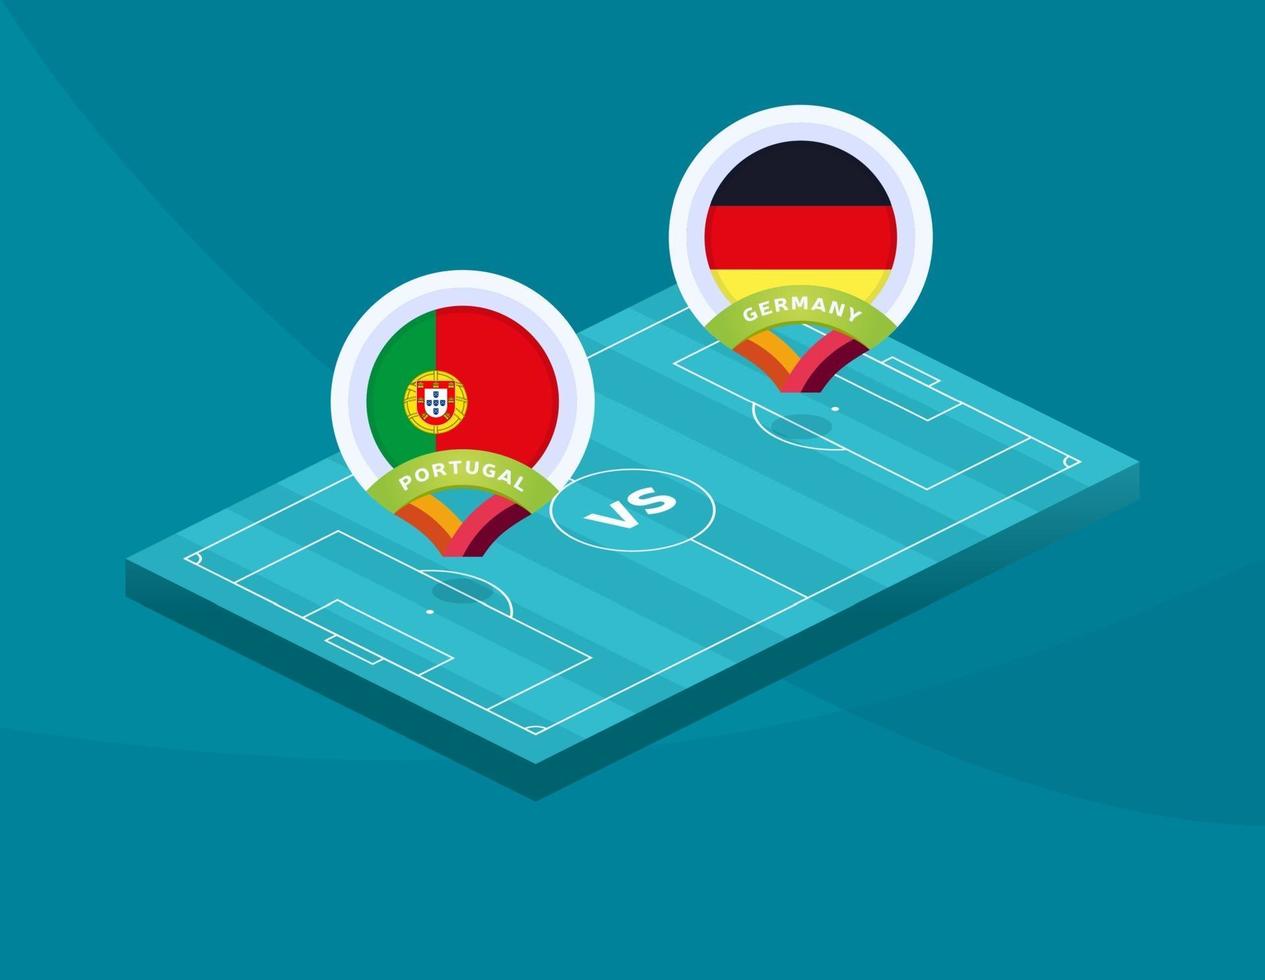 Portugal vs Germany football vector